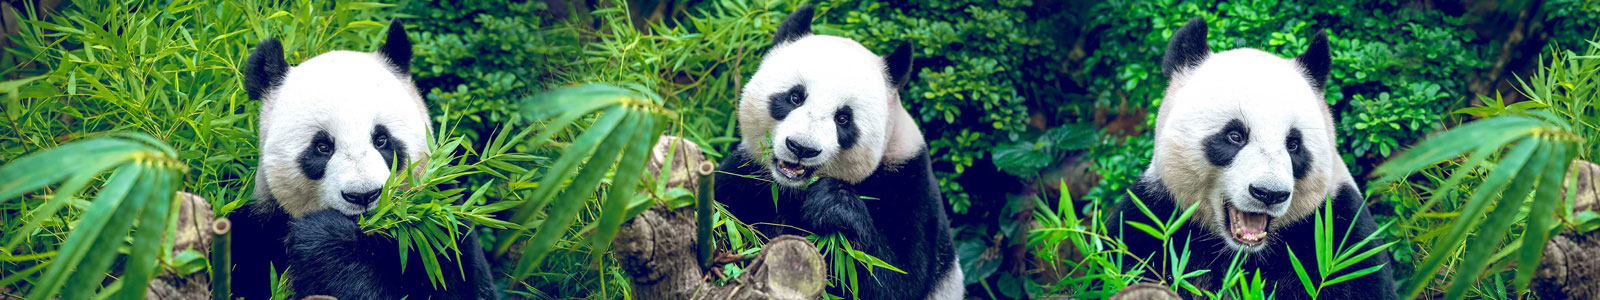 №4368 - Панды кушают листья бамбука